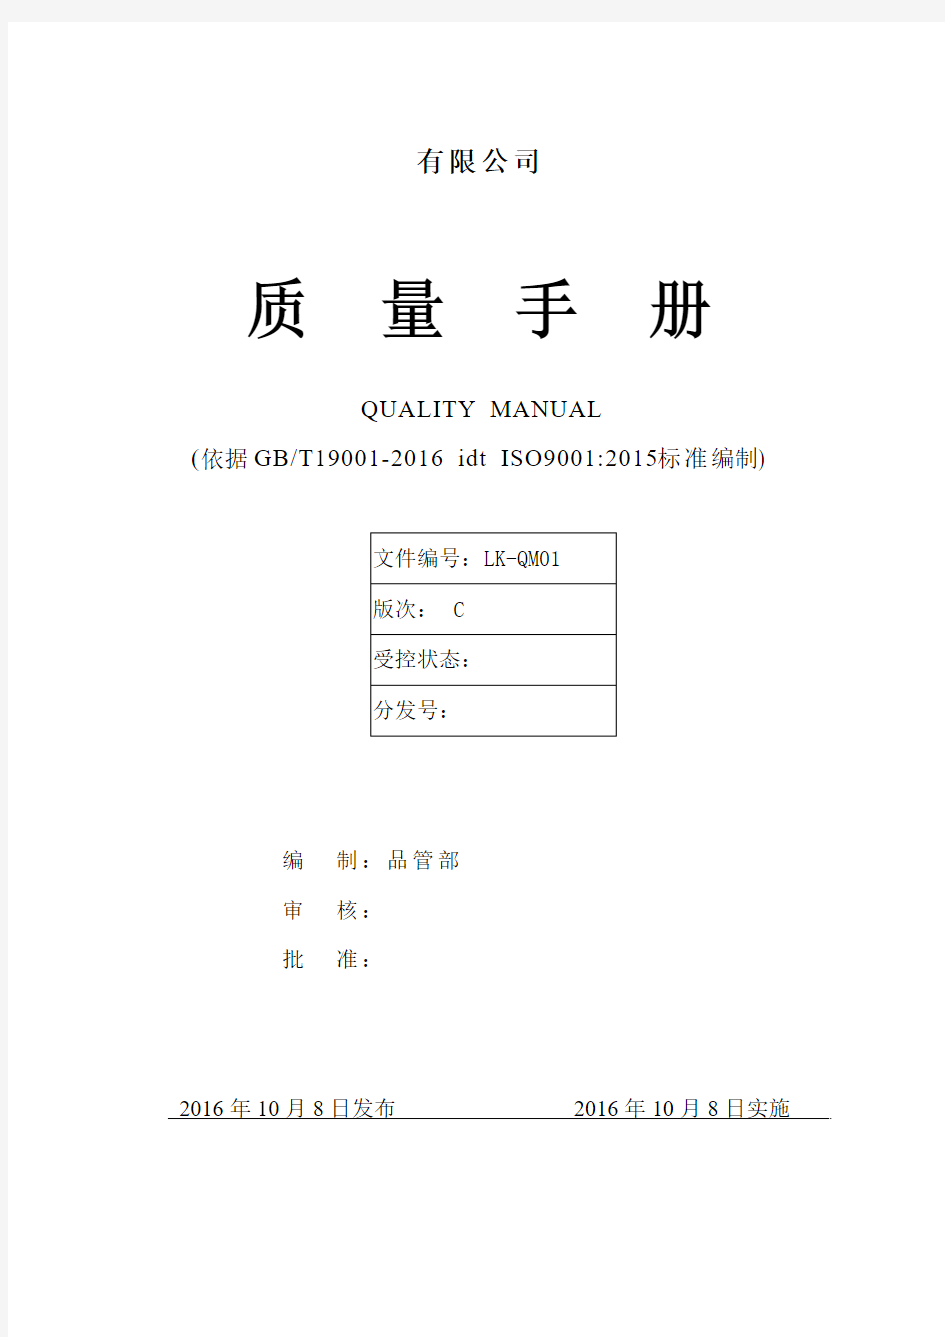 质量手册(ISO9001-2015)样板